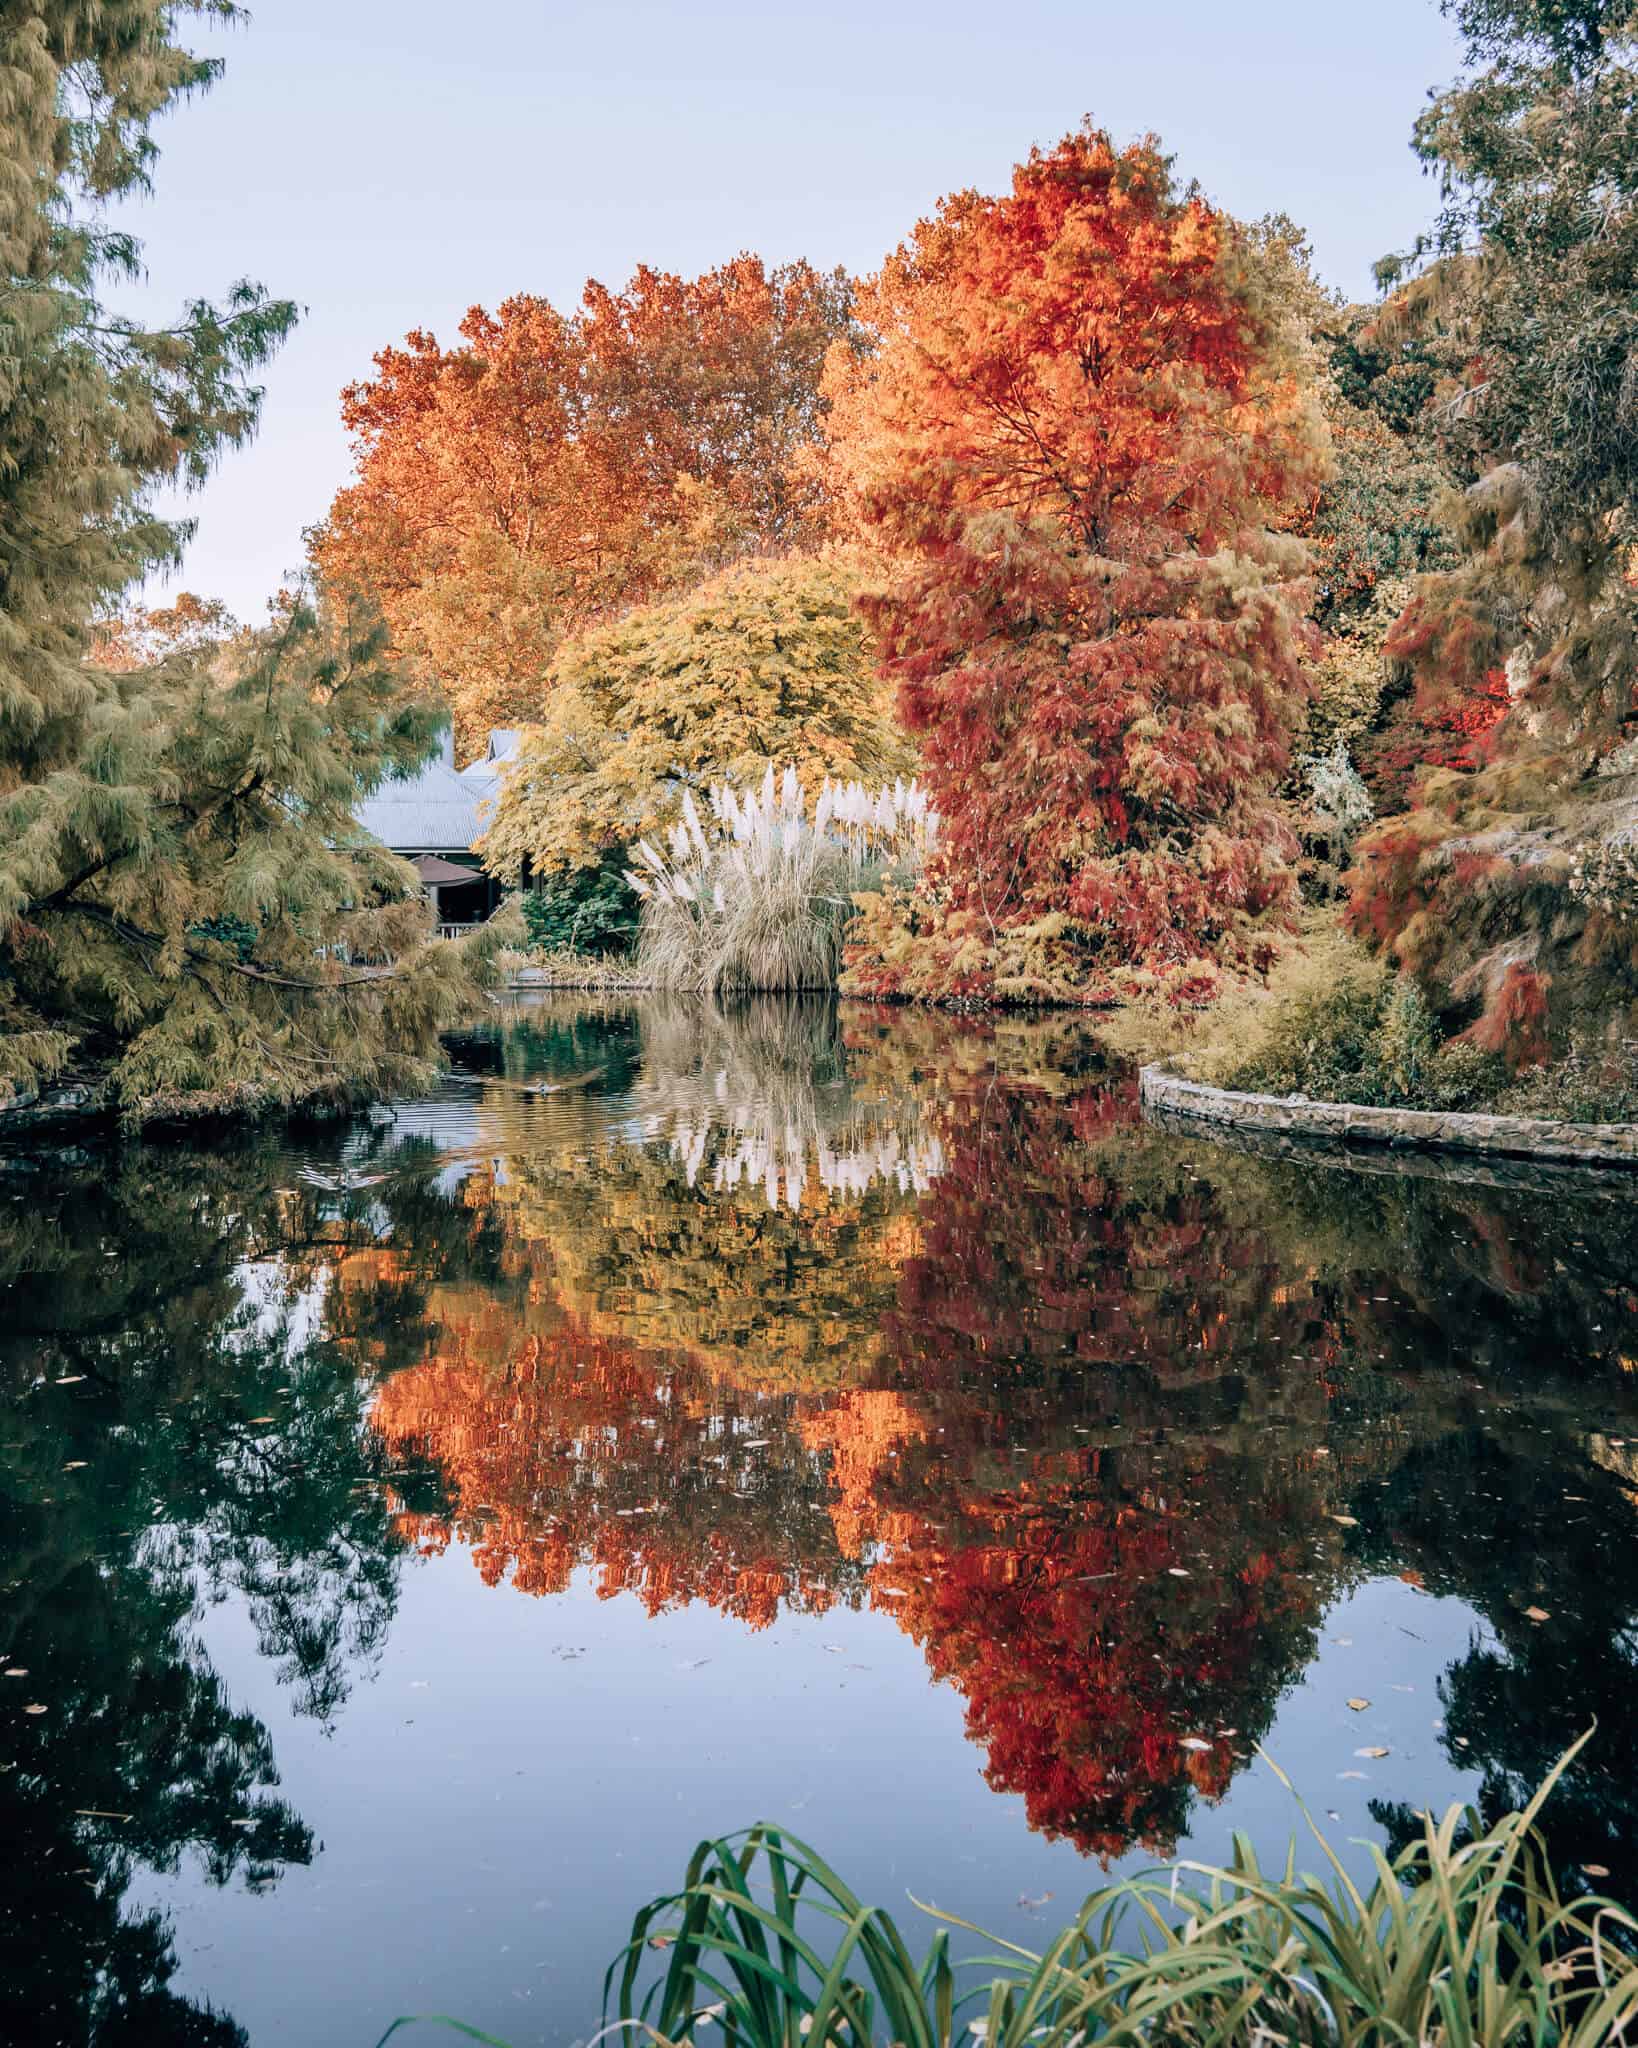 Adelaide in Autumn - Adelaide Botanic Gardens. Turtle pond with reflection of autumn colour trees